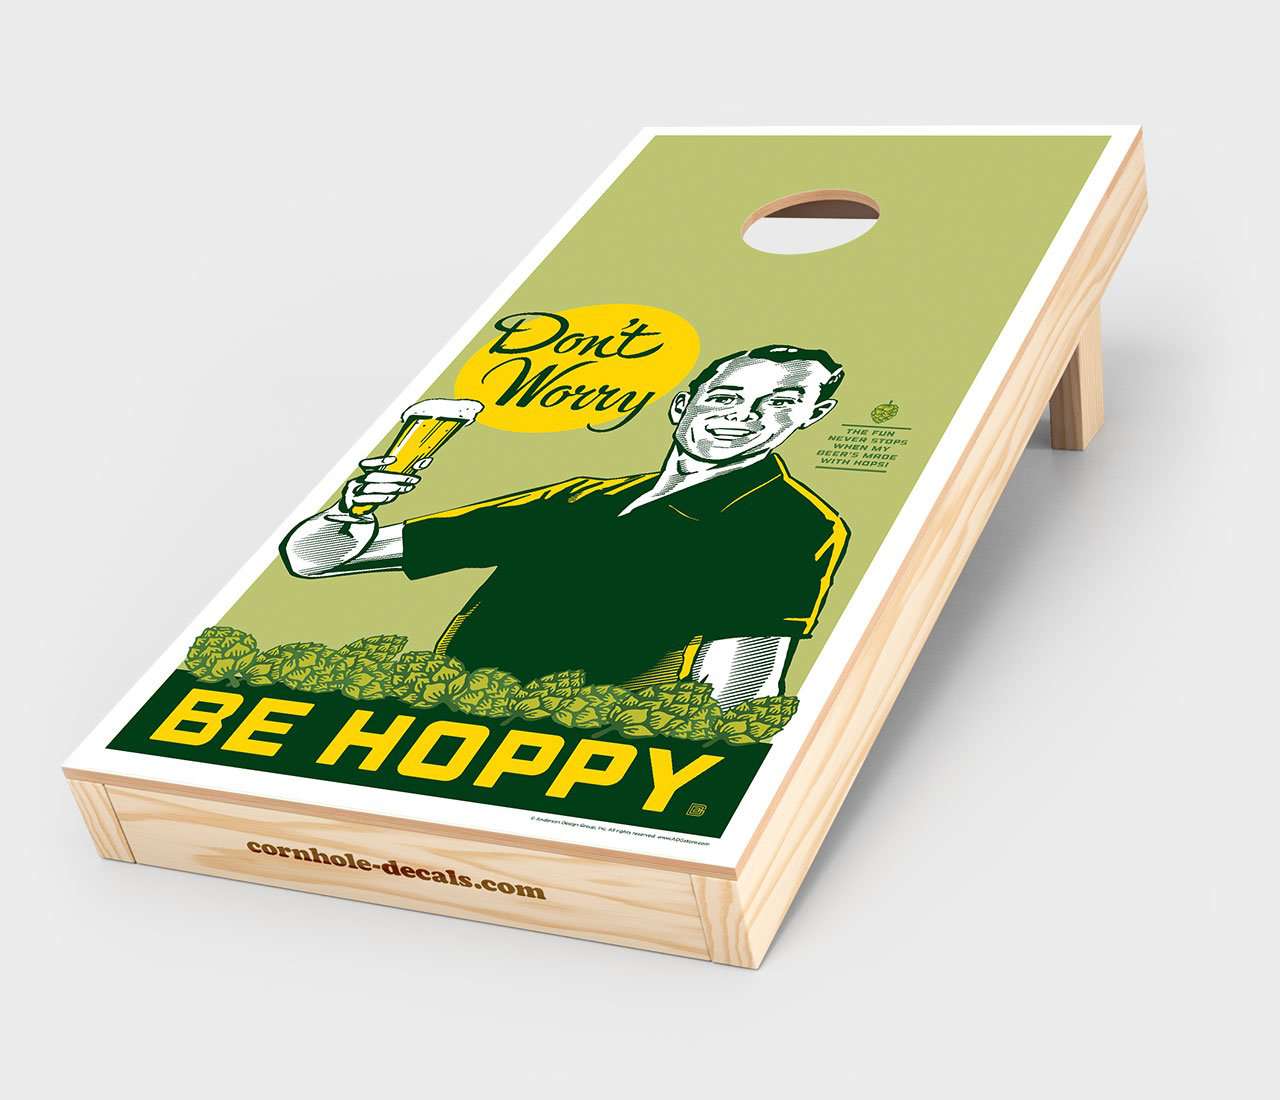 Chuggles Cornhole - Anderson Design Group - Don't Worry. Be Hoppy